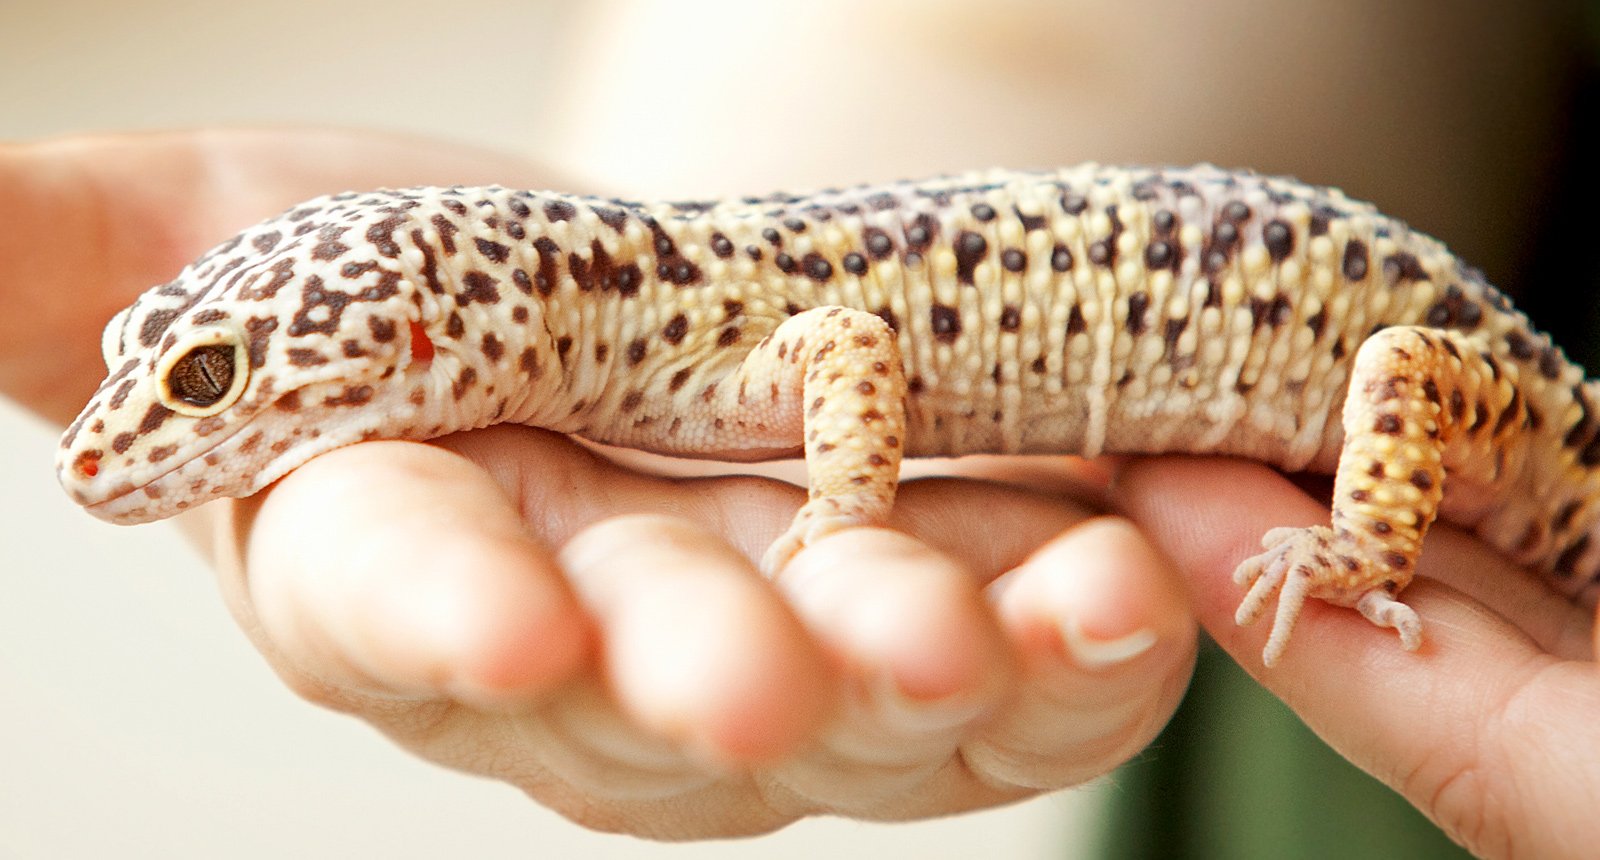 Leopard gecko* - Eublepharis macularius